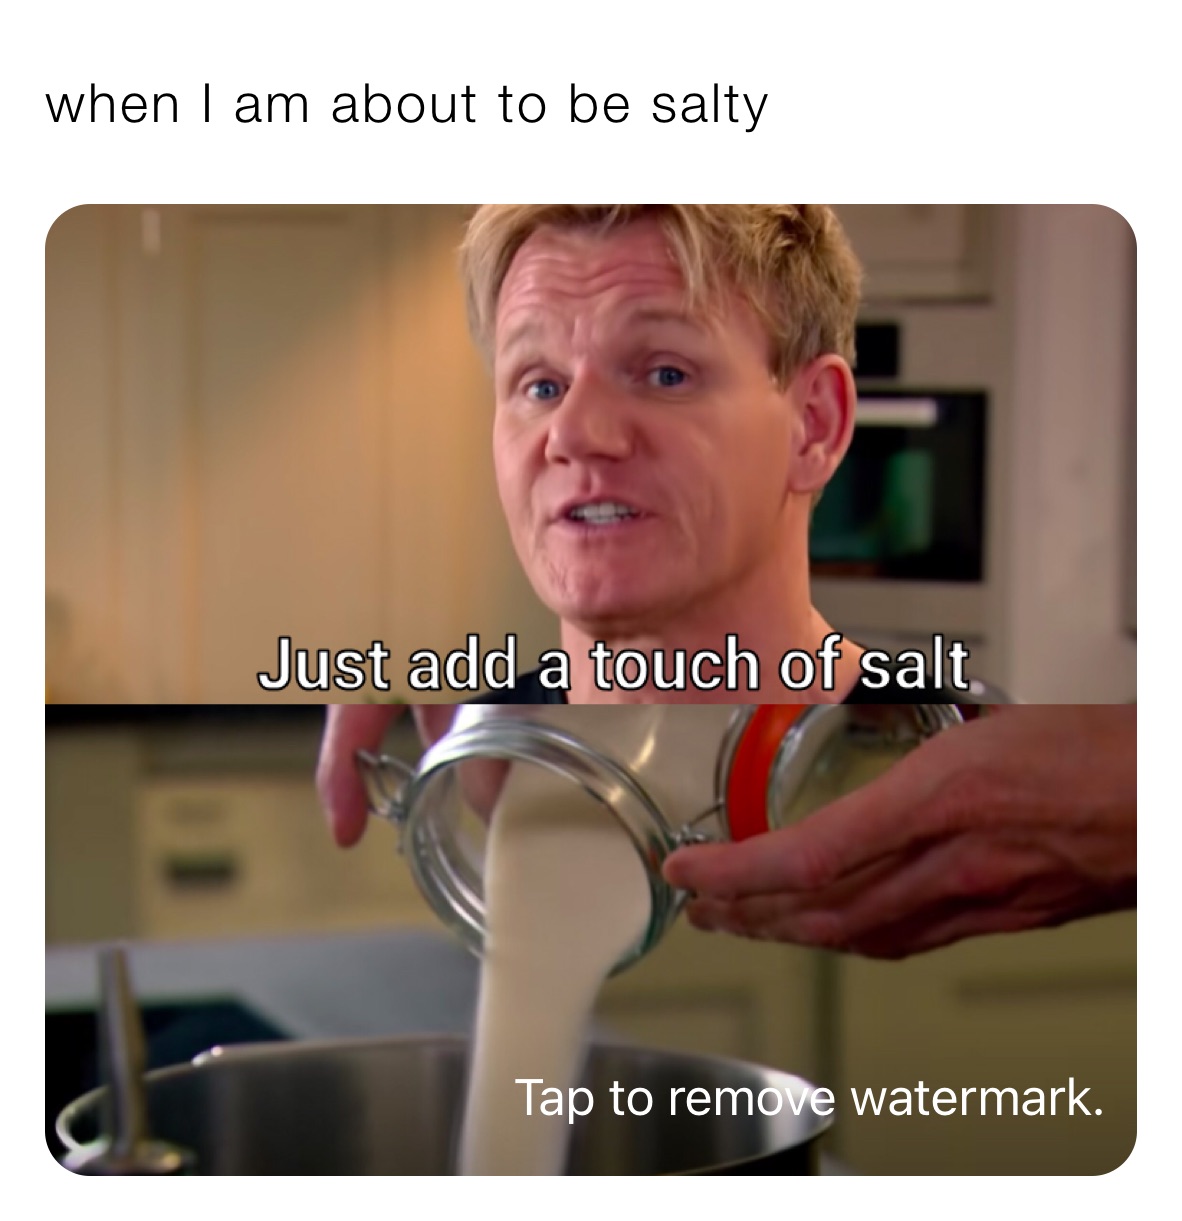 im salty meme